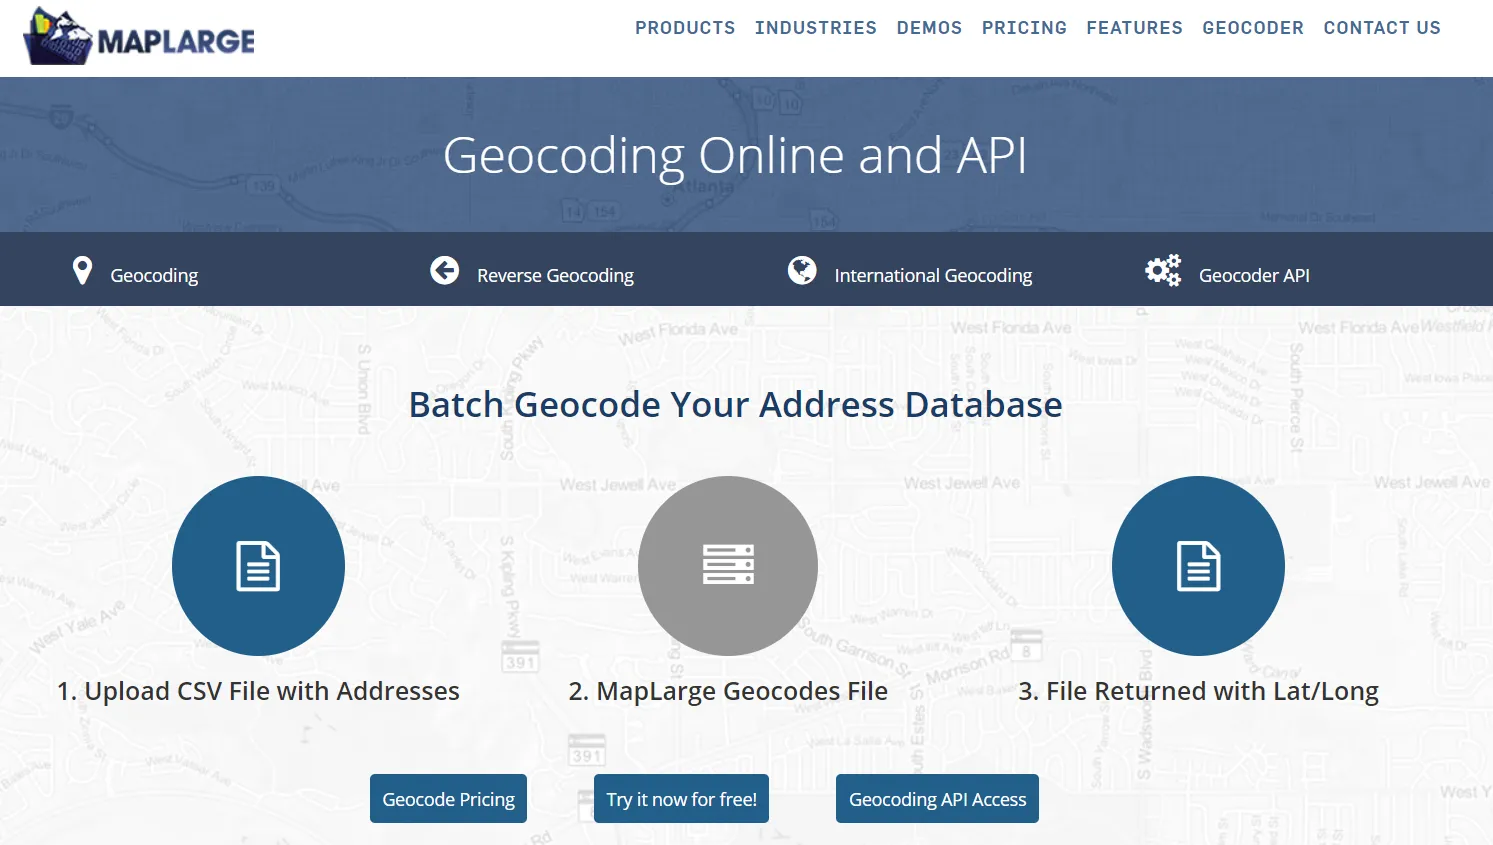 MapLarge geocoding tool